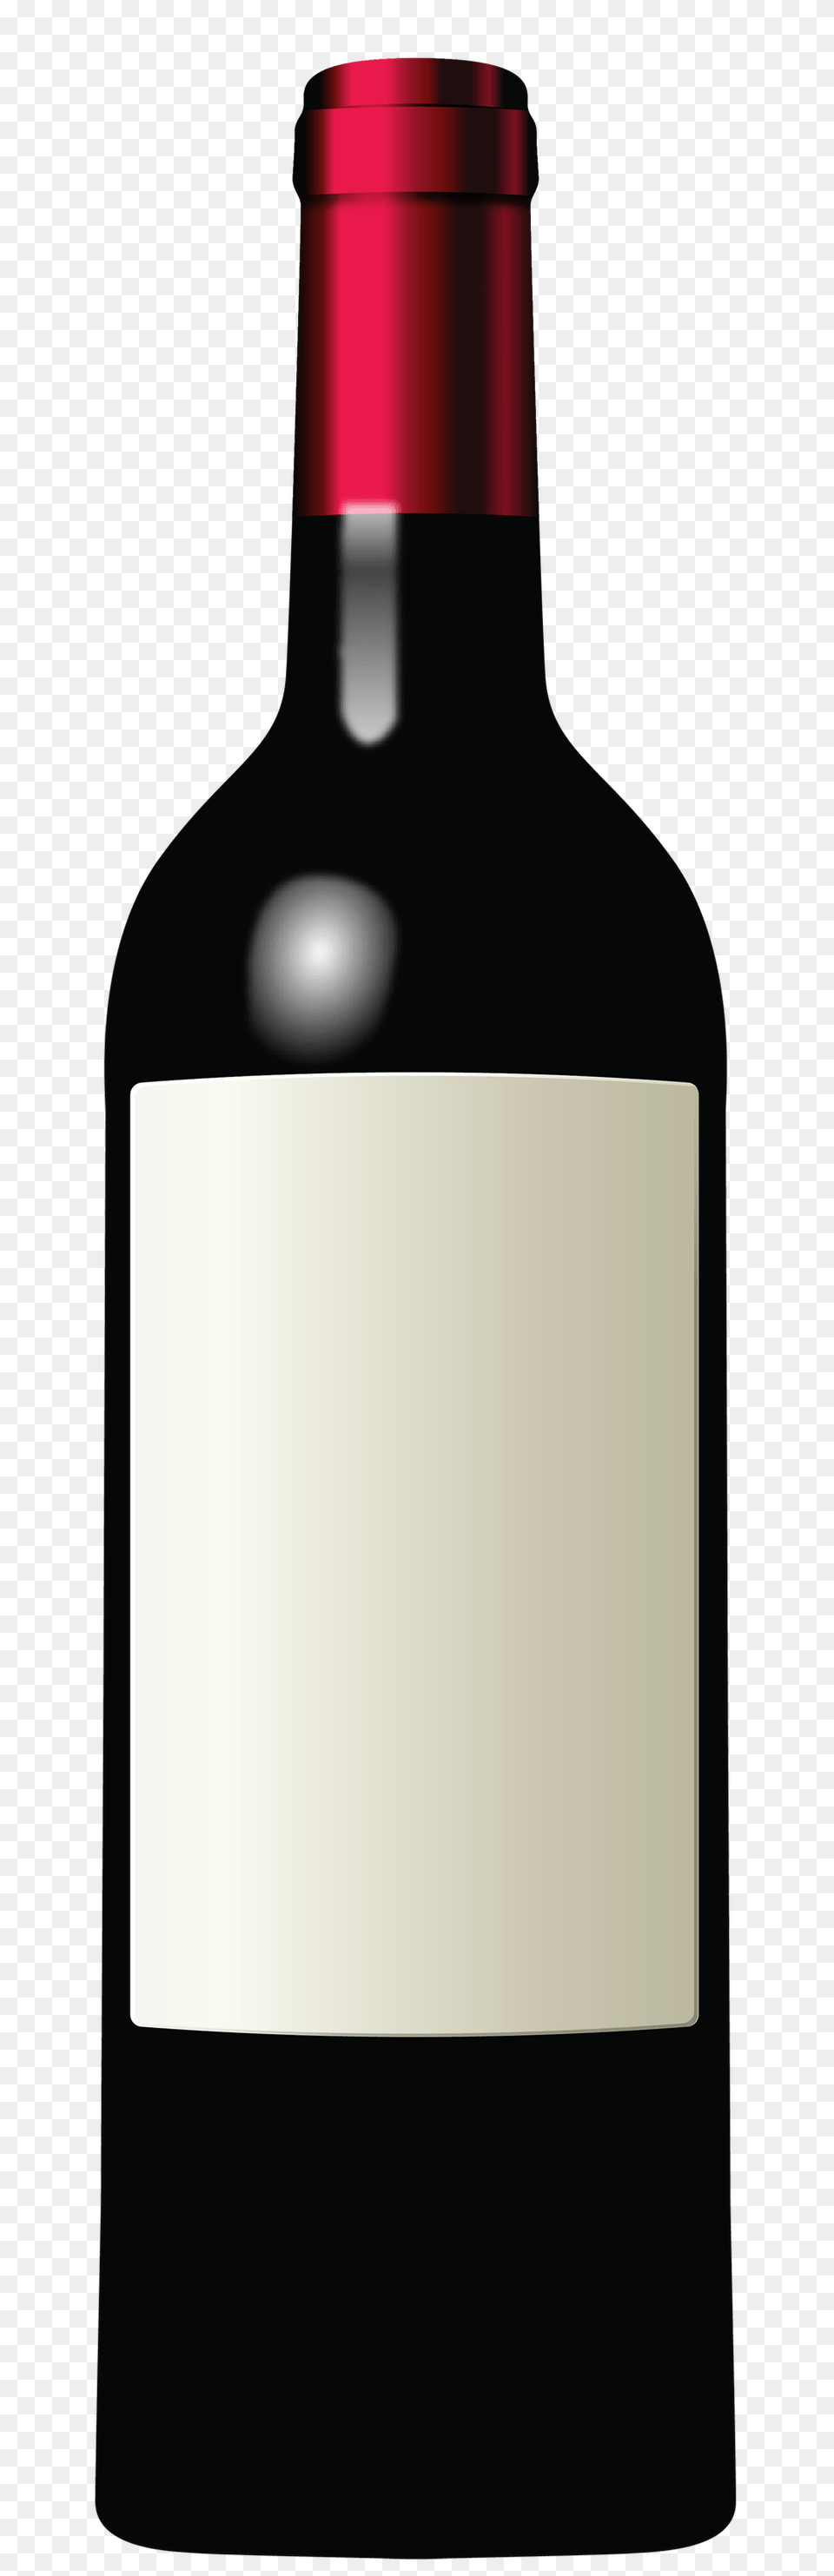 Bottle Wine Red Whitelabel, Alcohol, Beverage, Liquor, Wine Bottle Png